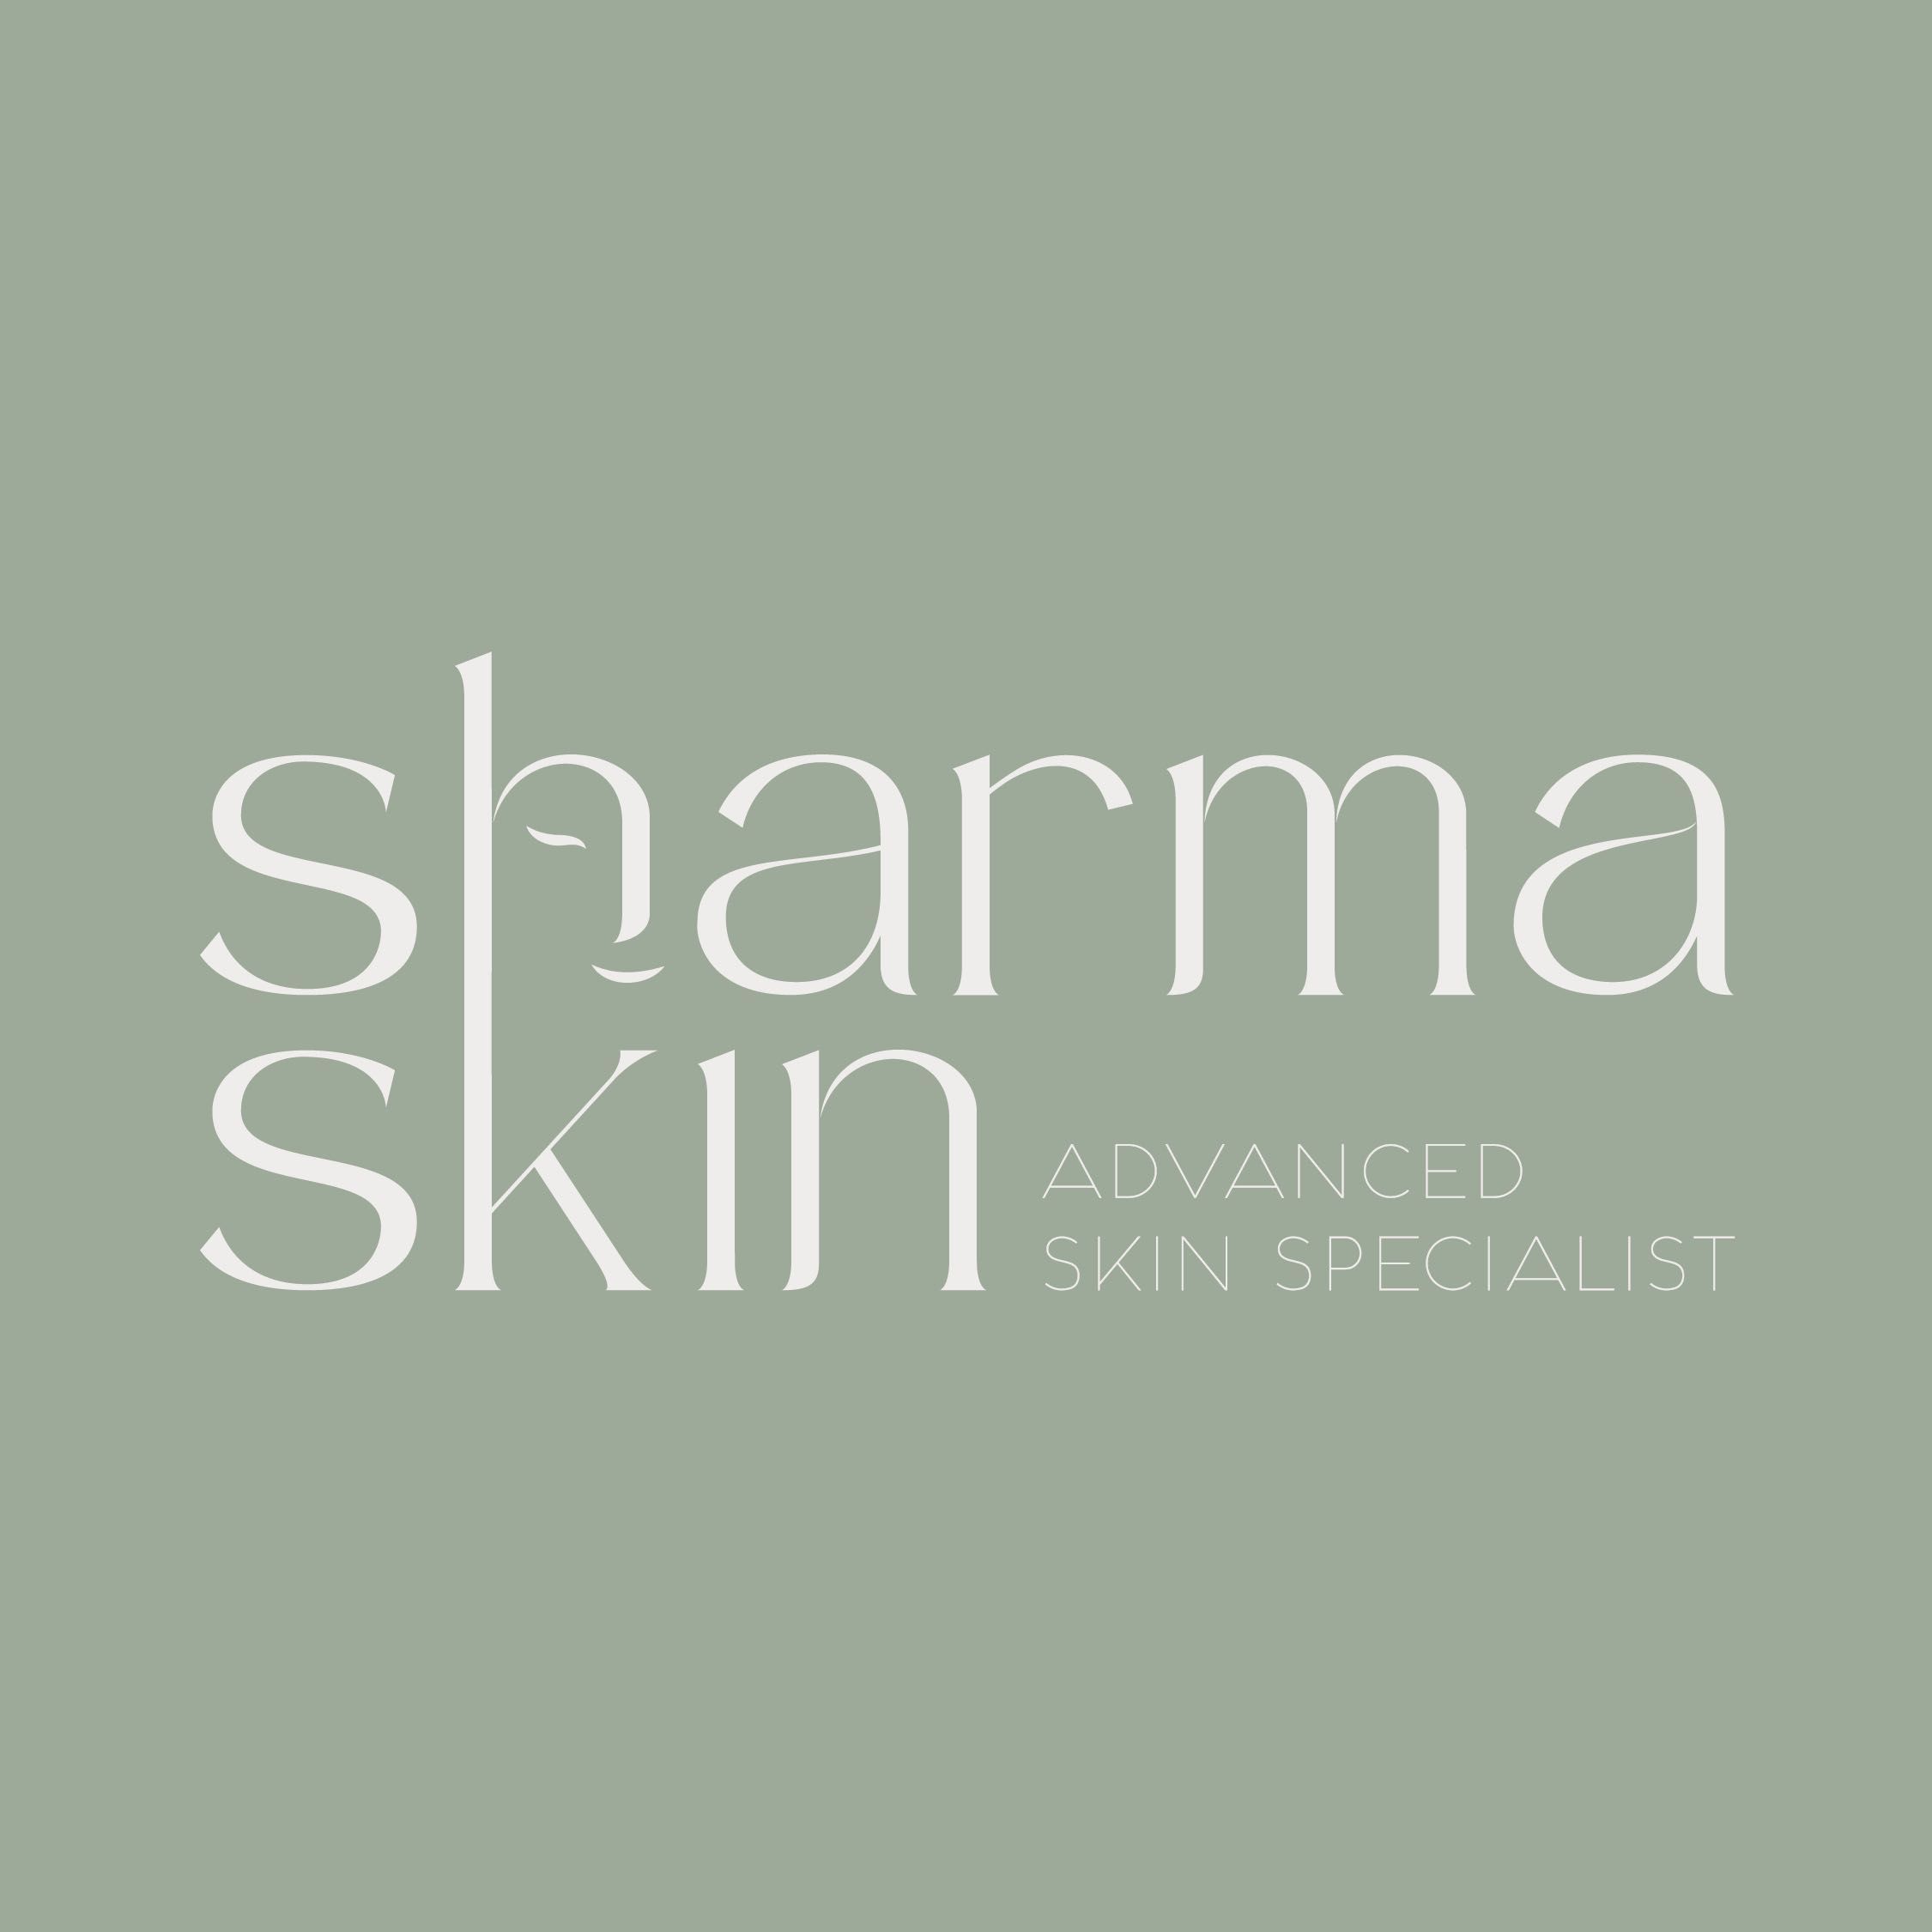 Sharma skin, Oak place, Liverpool